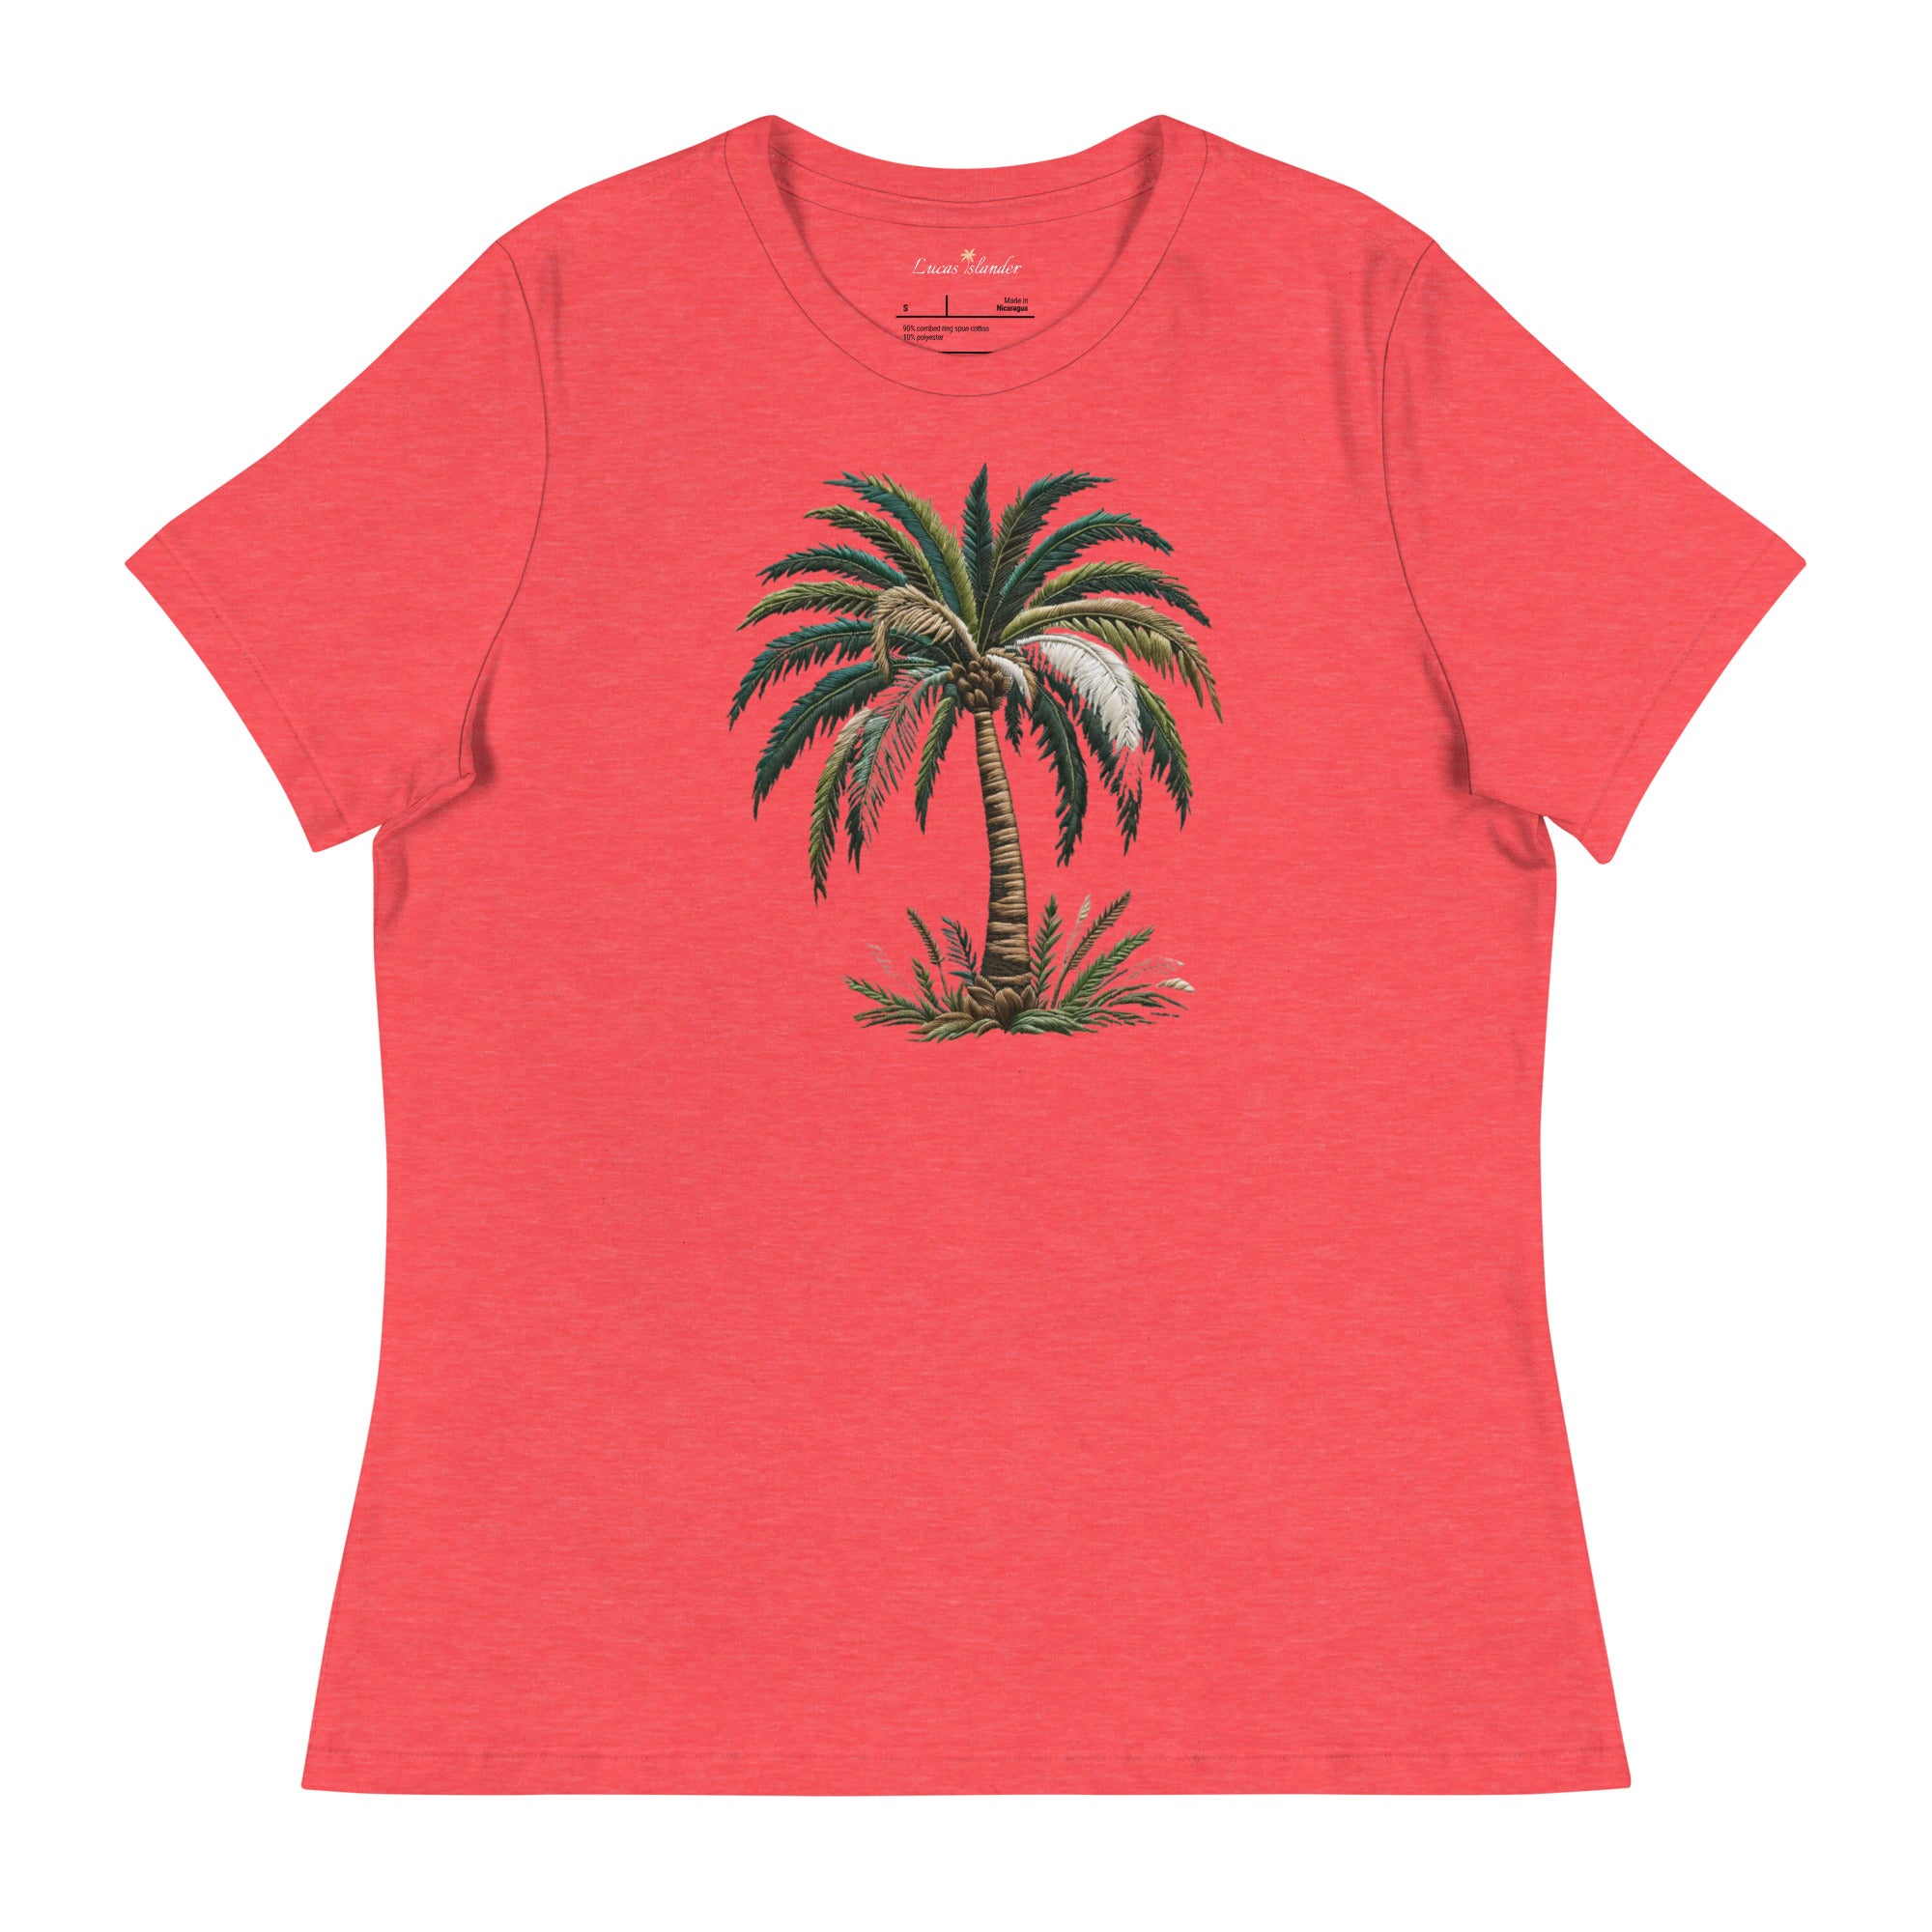 Unwind in Paradise: Lucas Islander's Palm Tree T-Shirt Women's Relaxed T-Shirt